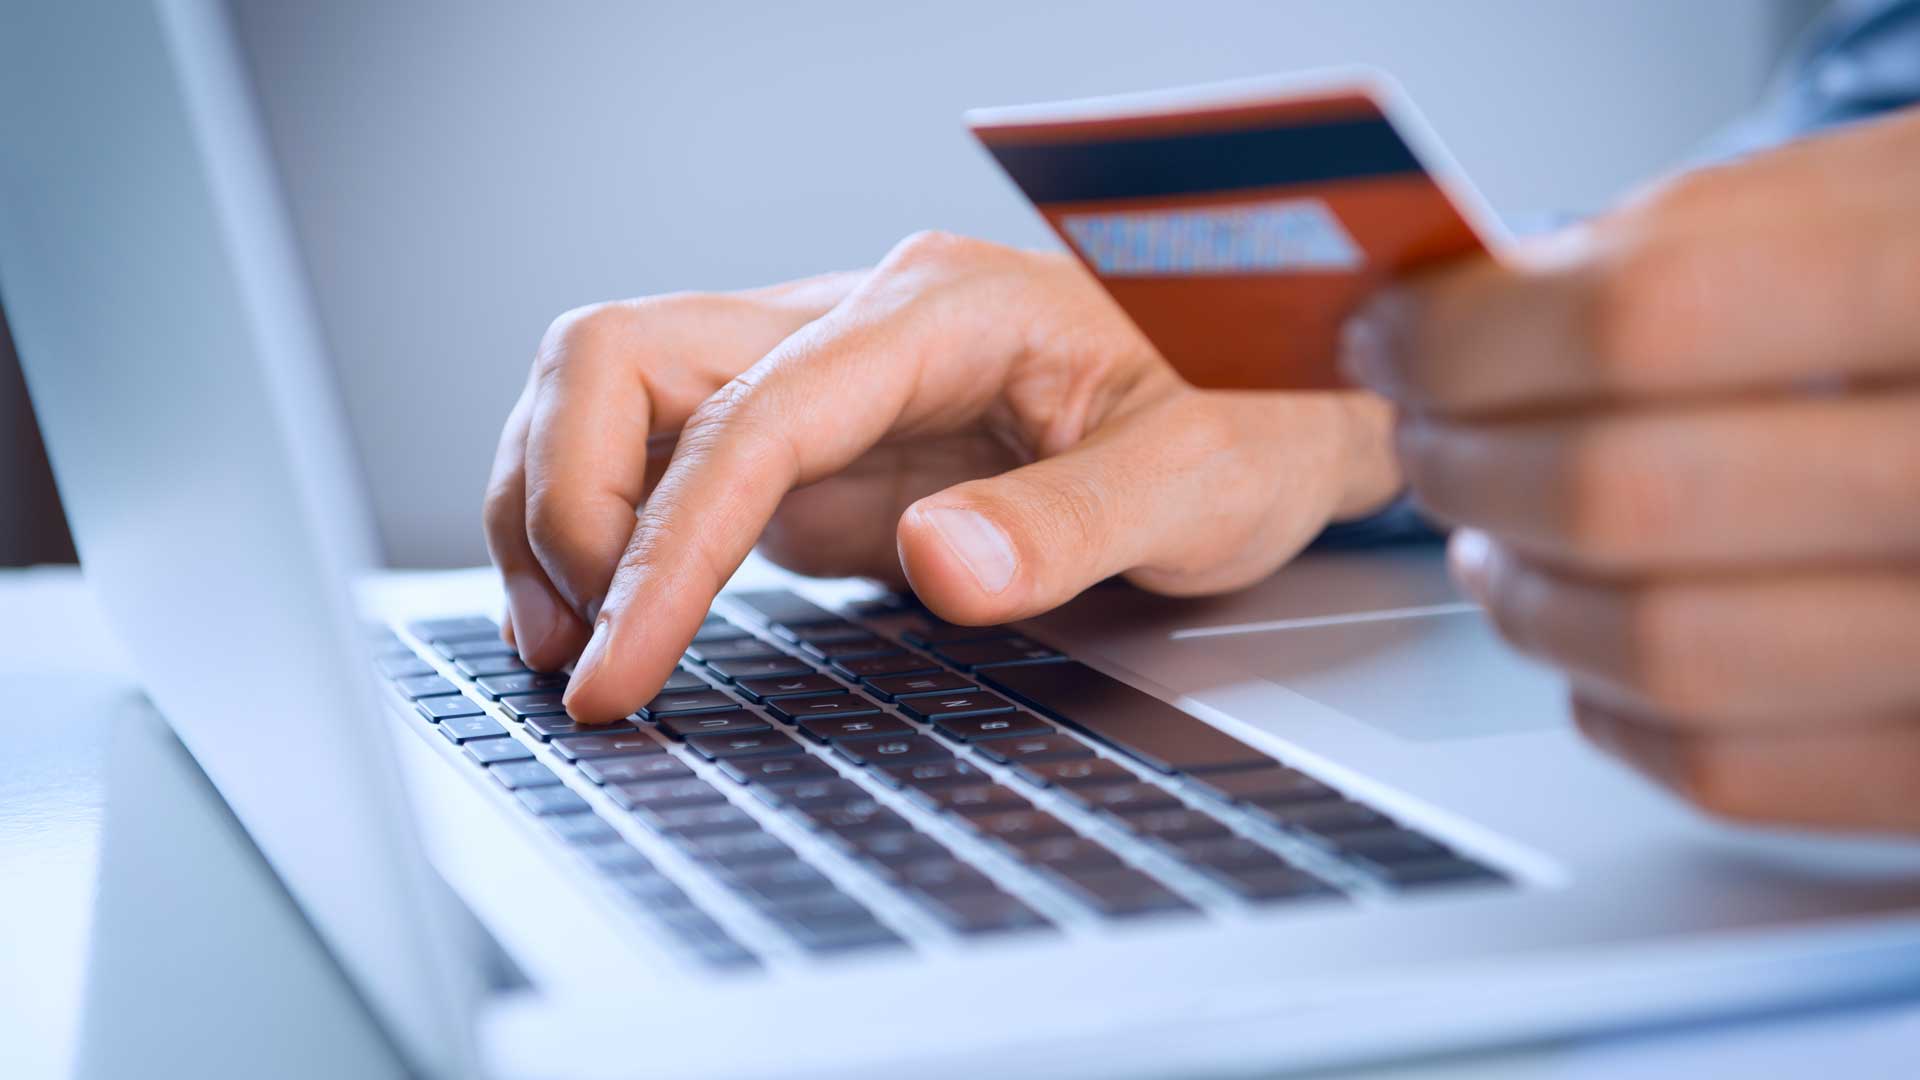 Займы на карту срочно без проверки без отказа онлайн круглосуточно с плохой кредитной